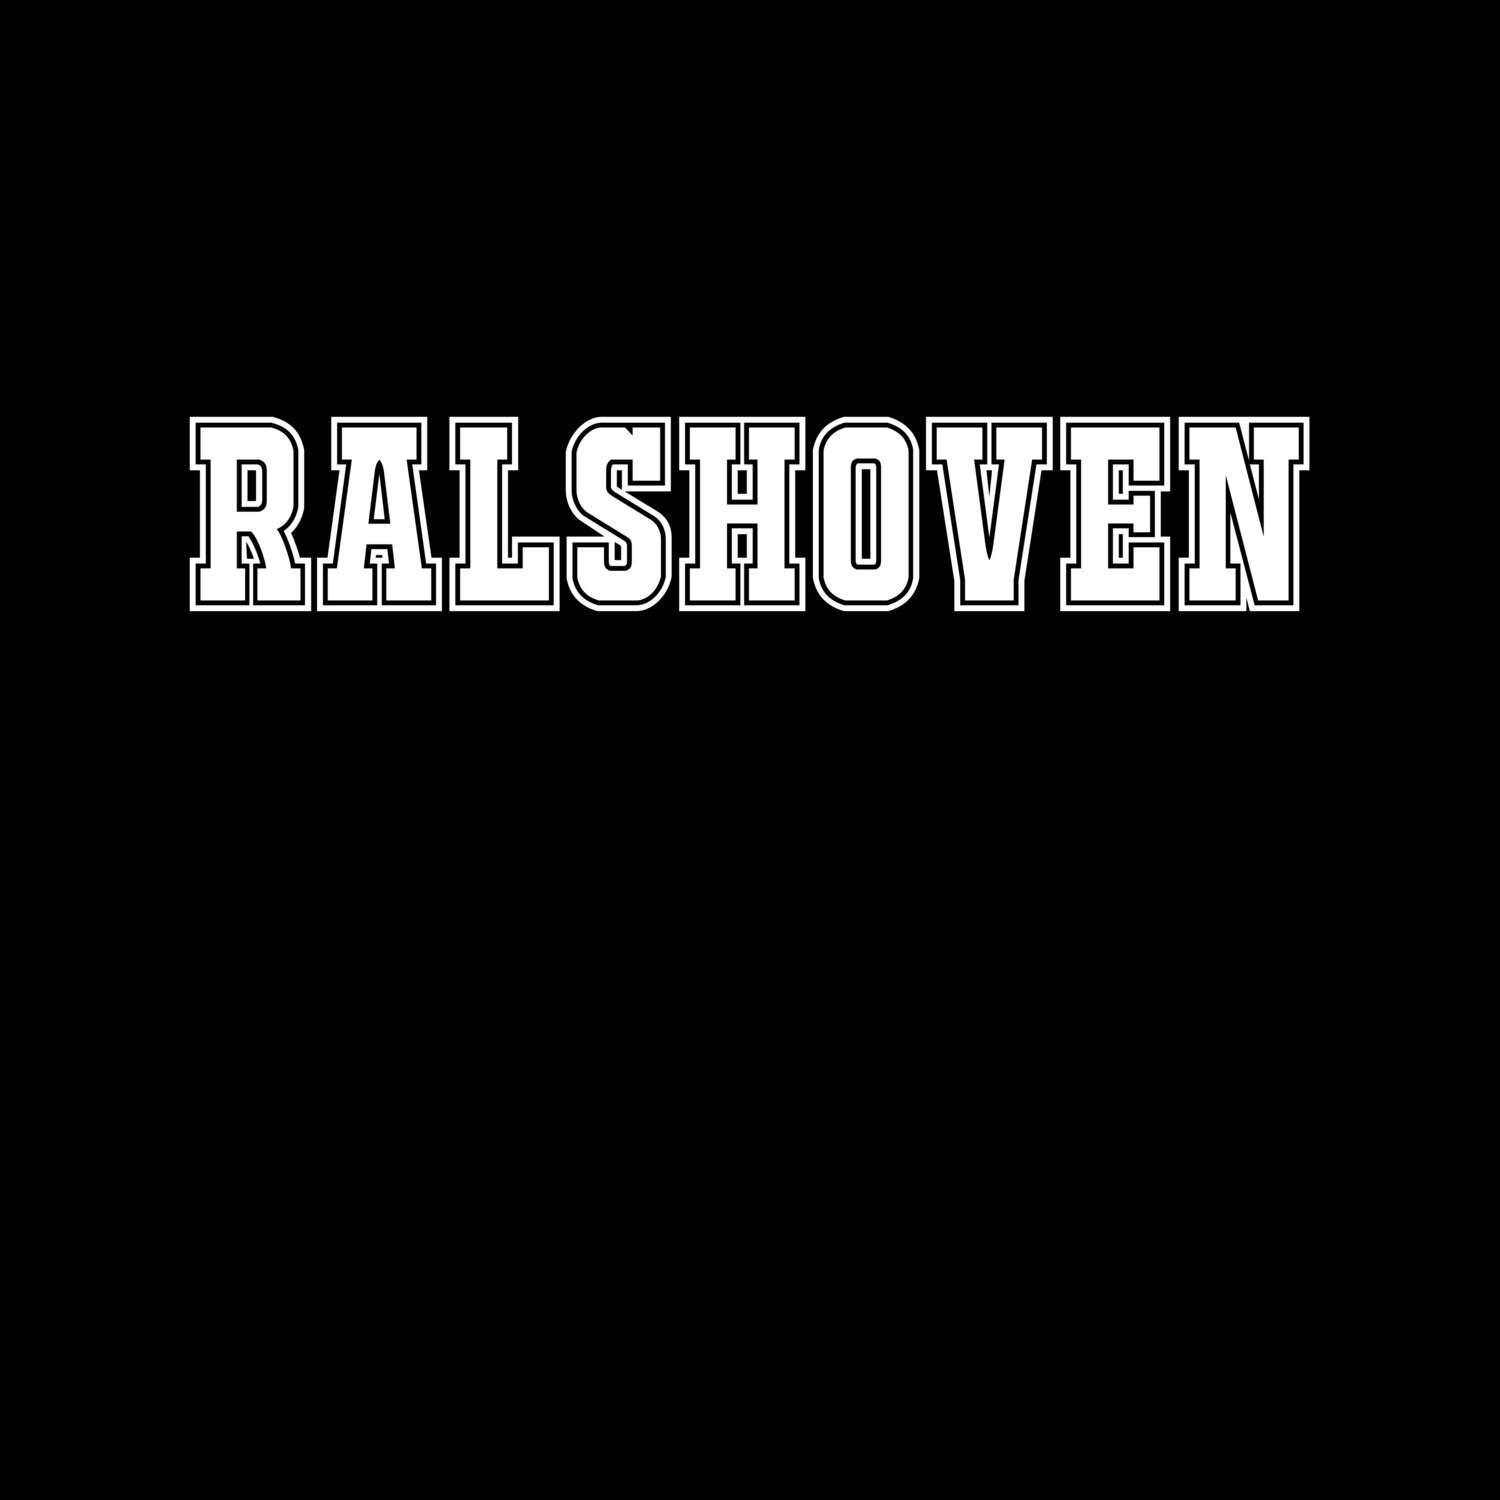 Ralshoven T-Shirt »Classic«